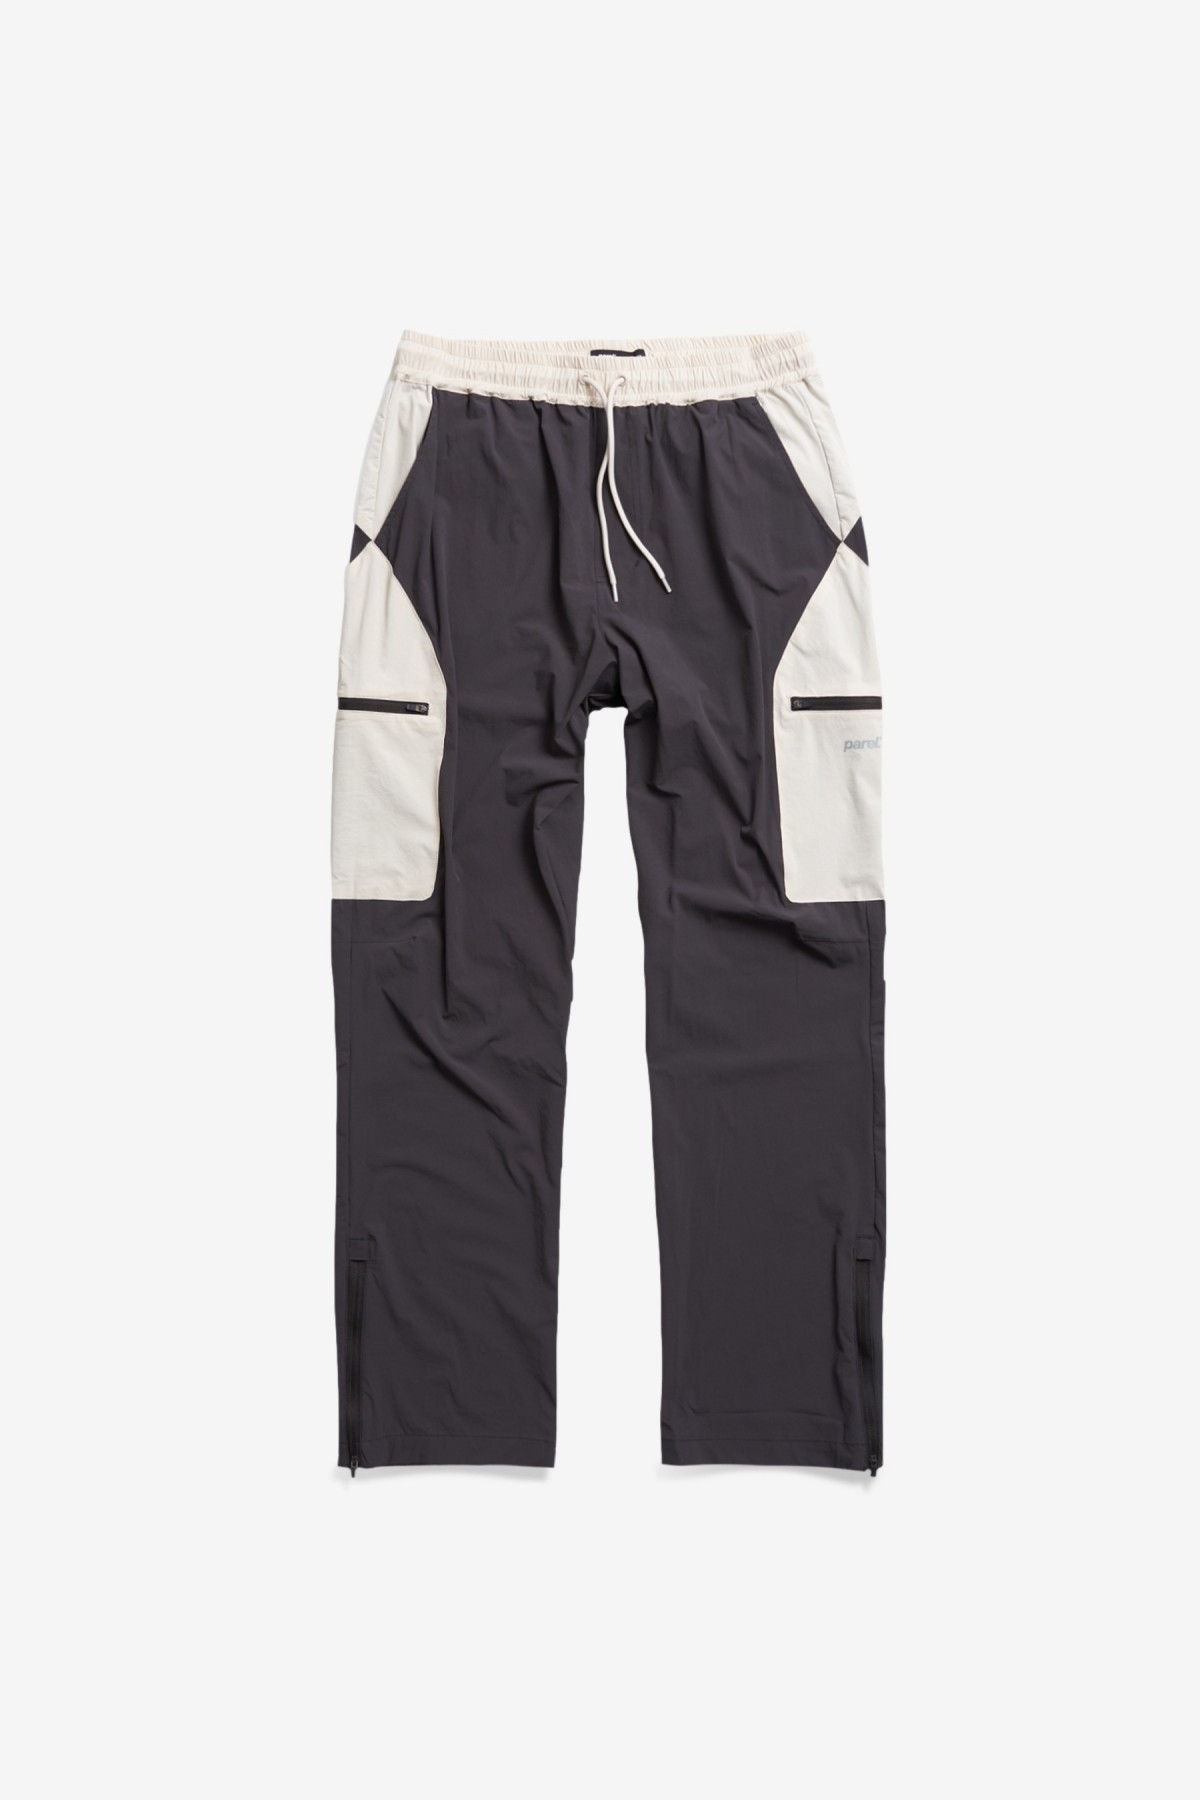 Parel Vinson Pants in Ash/Cream